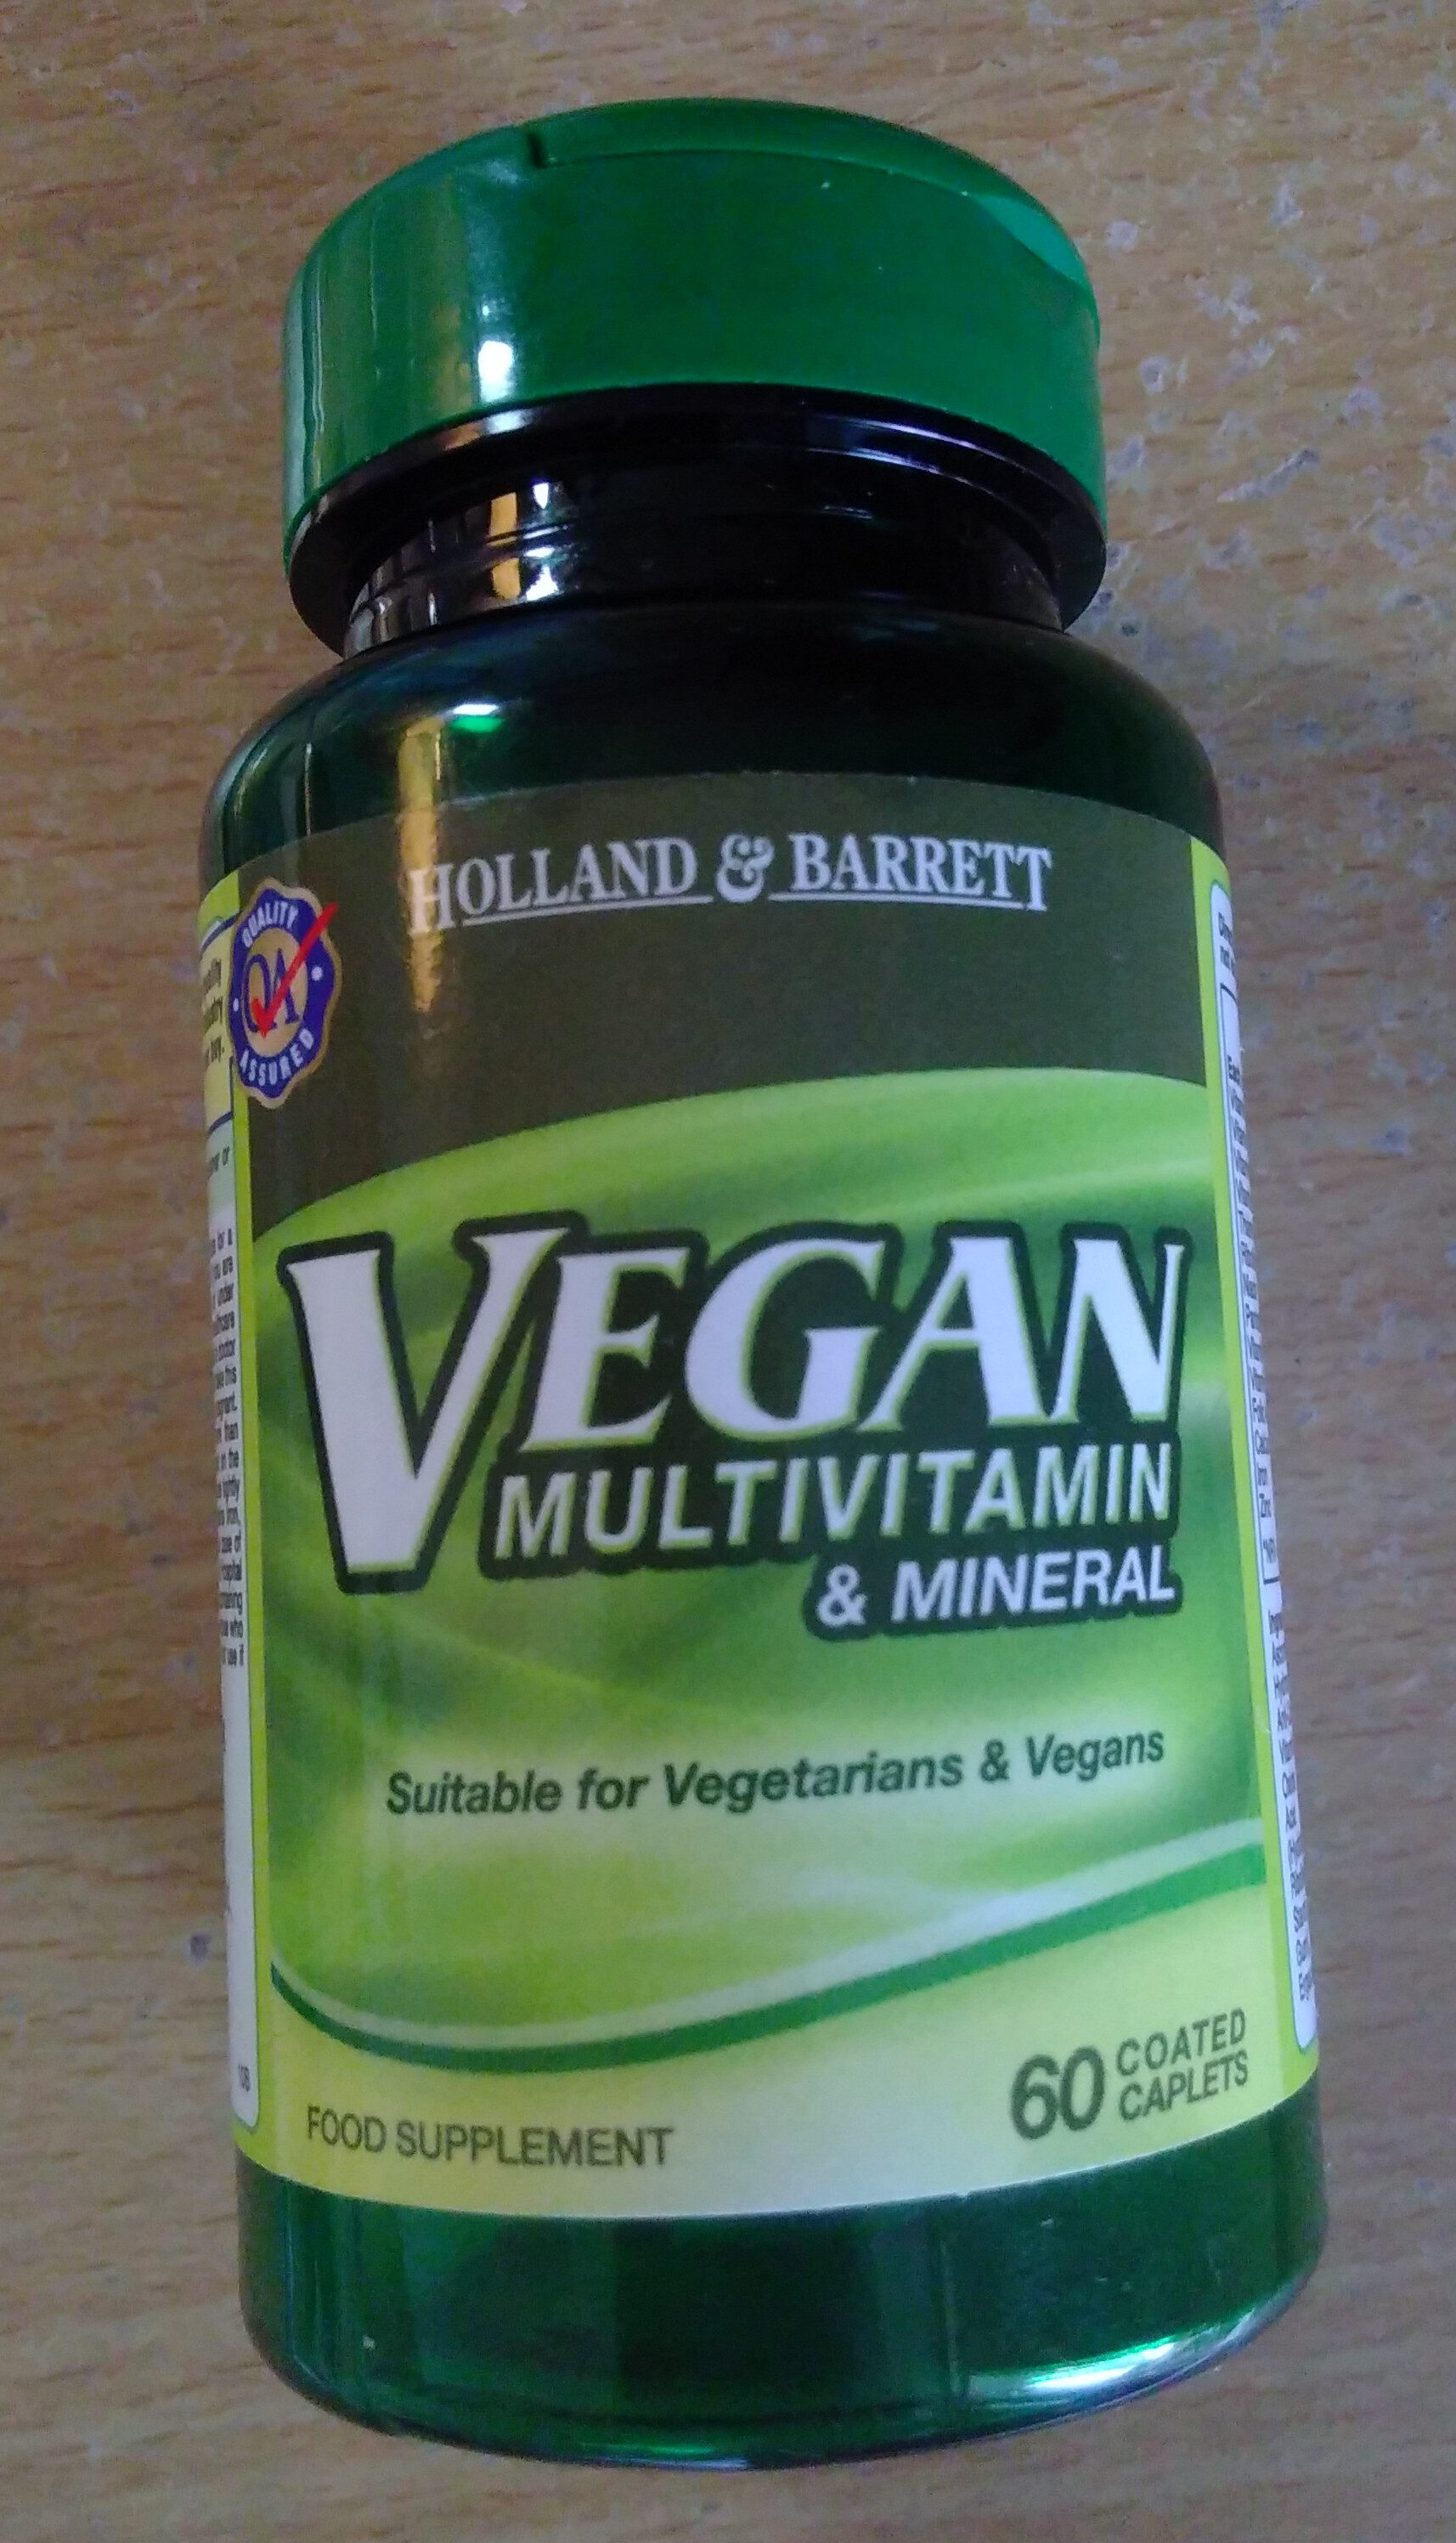 Vegan multivitamin & Mineral Food Supplement - Product - en